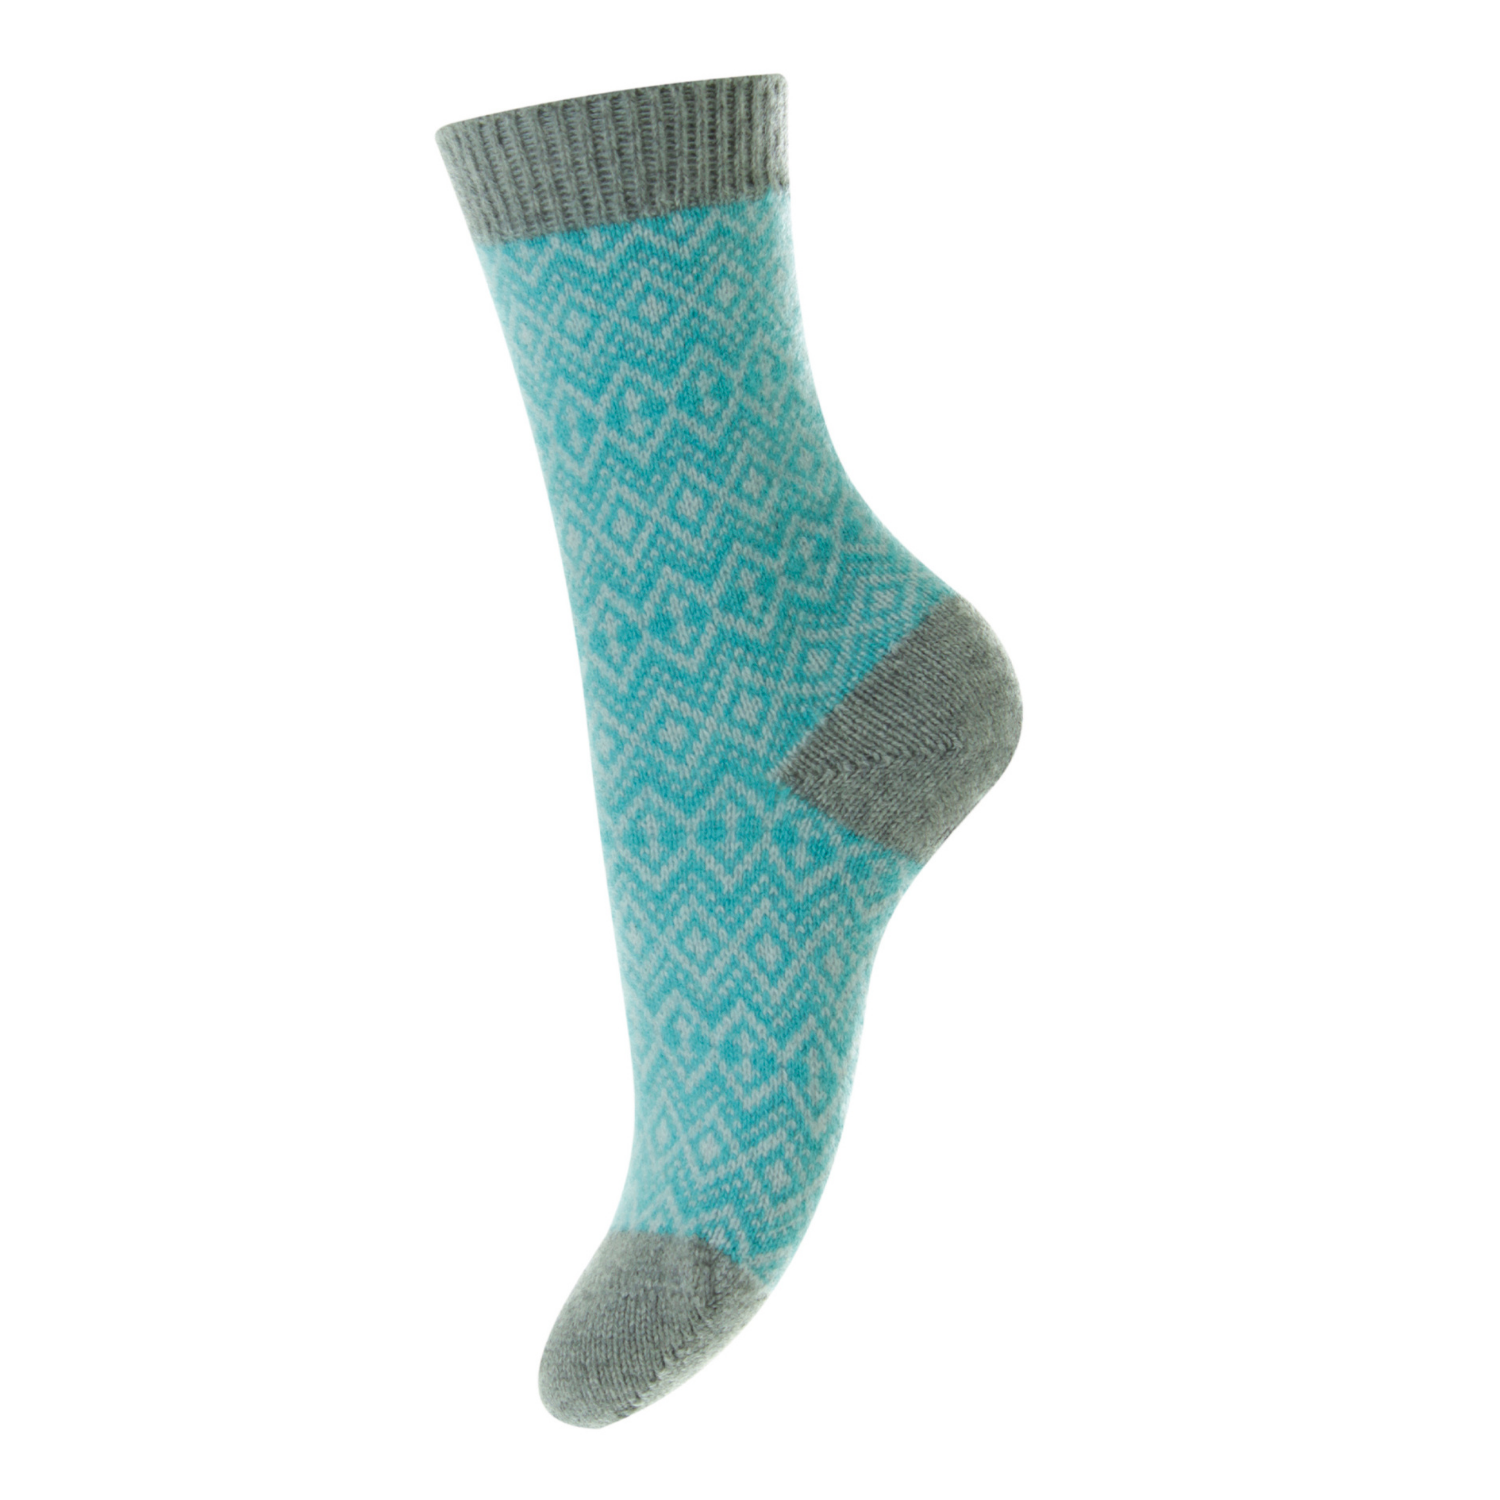 Pantherella Women's Socks | Bright Aqua Patterned Cashmere Socks